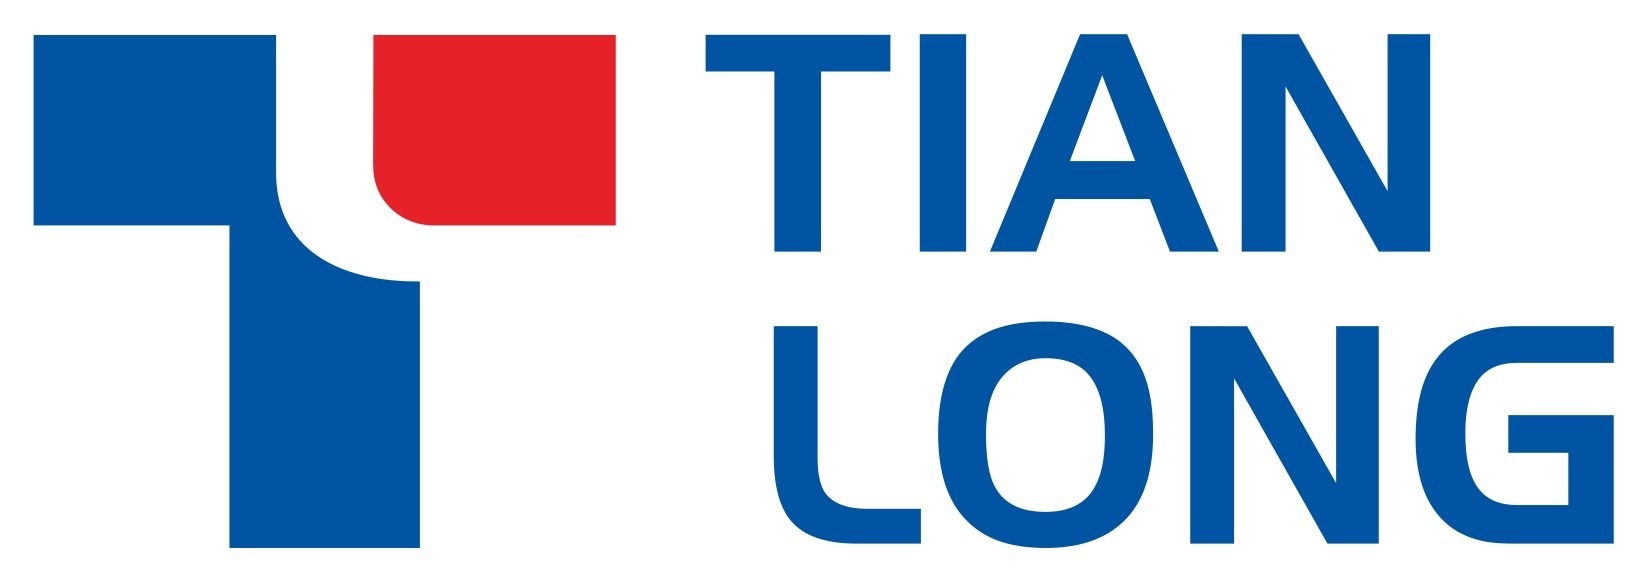 Xi'an Tianlong Science and Technology Co., Ltd logo.